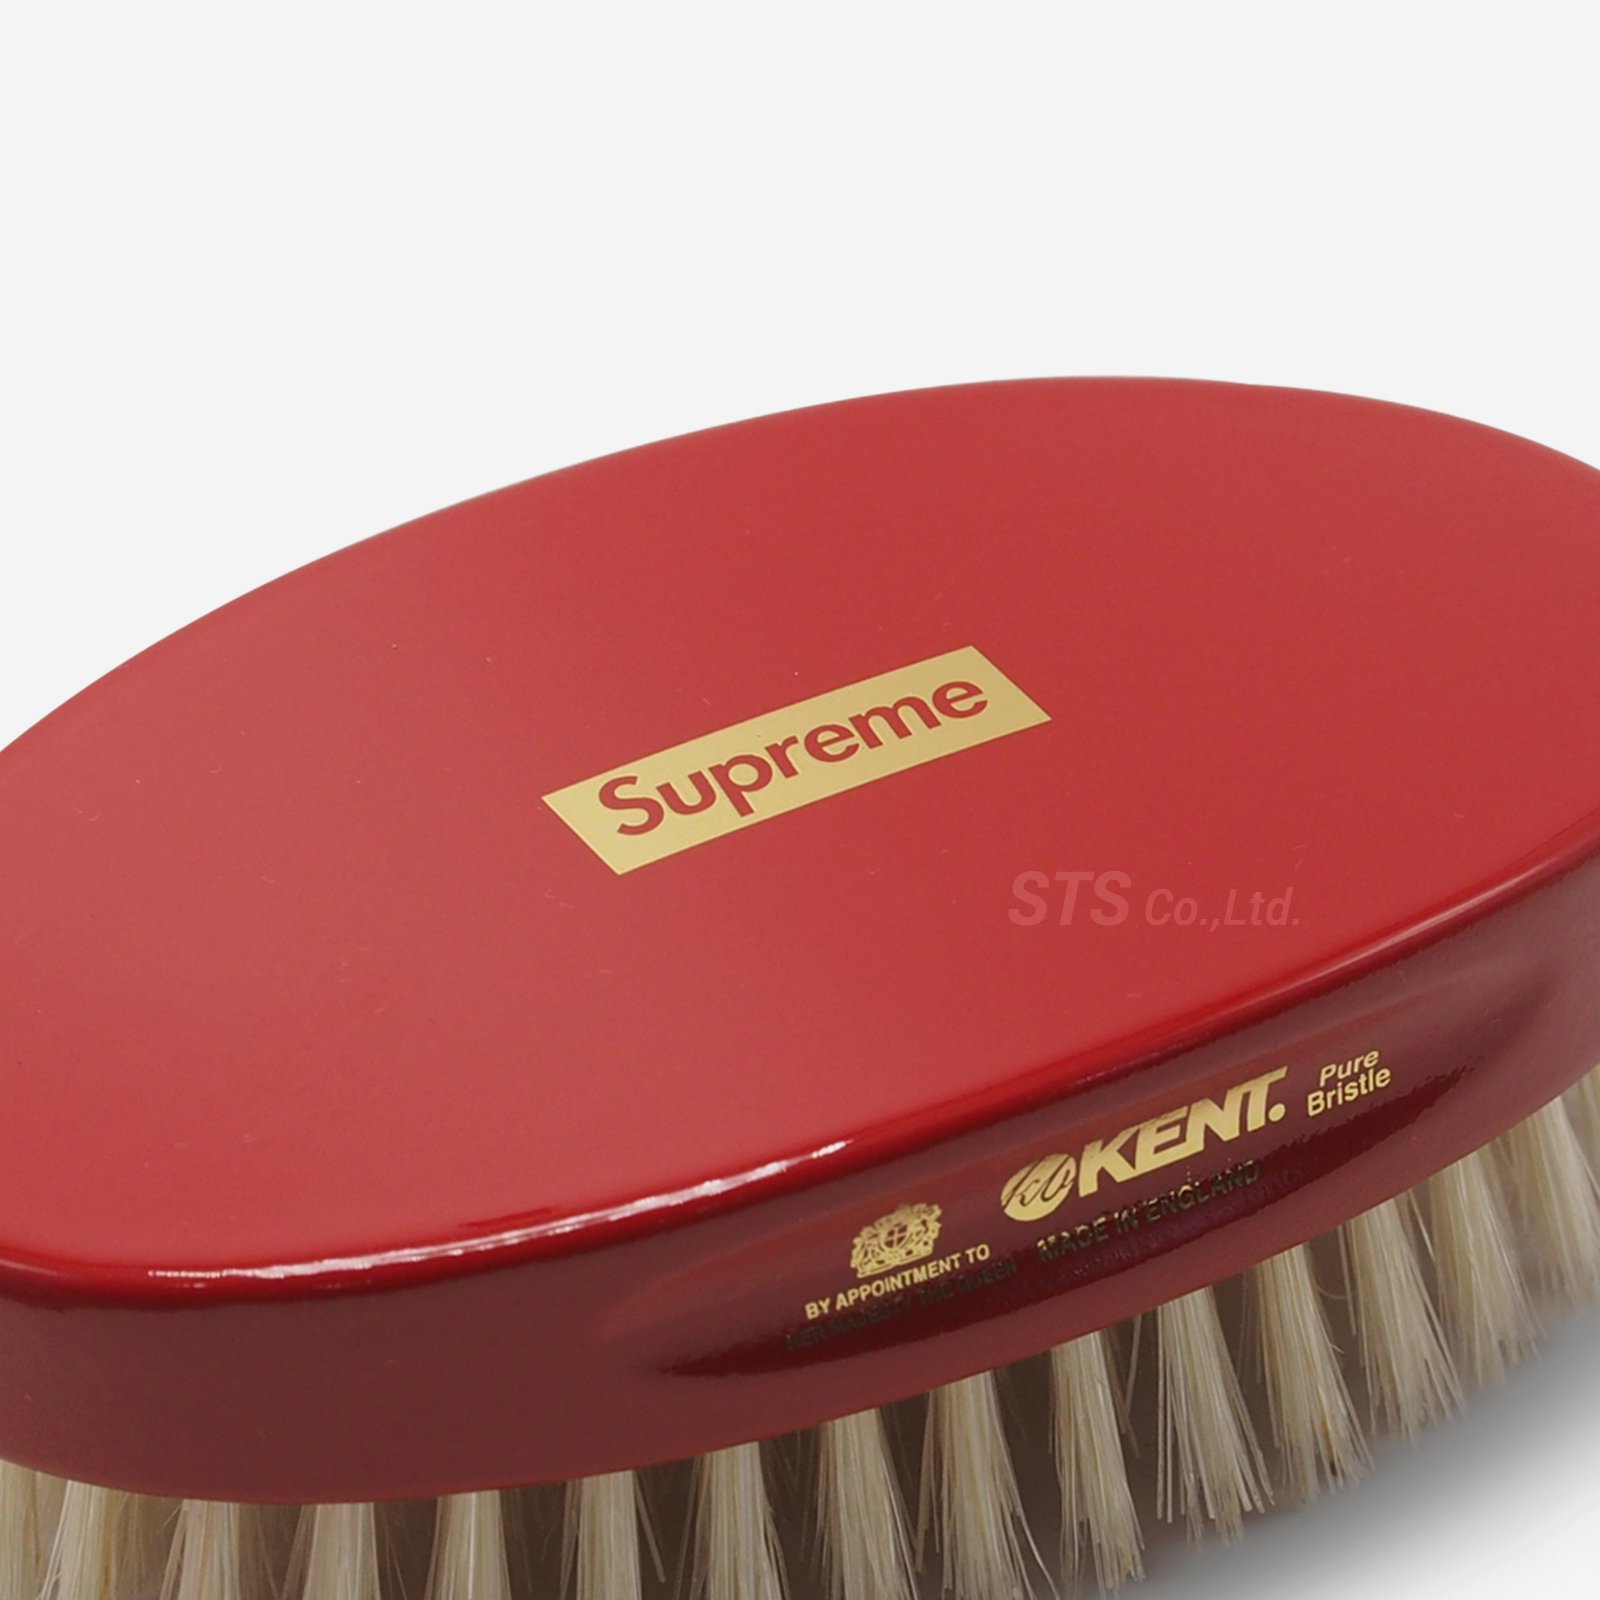 Supreme/Kent Military Hairbrush - ParkSIDER